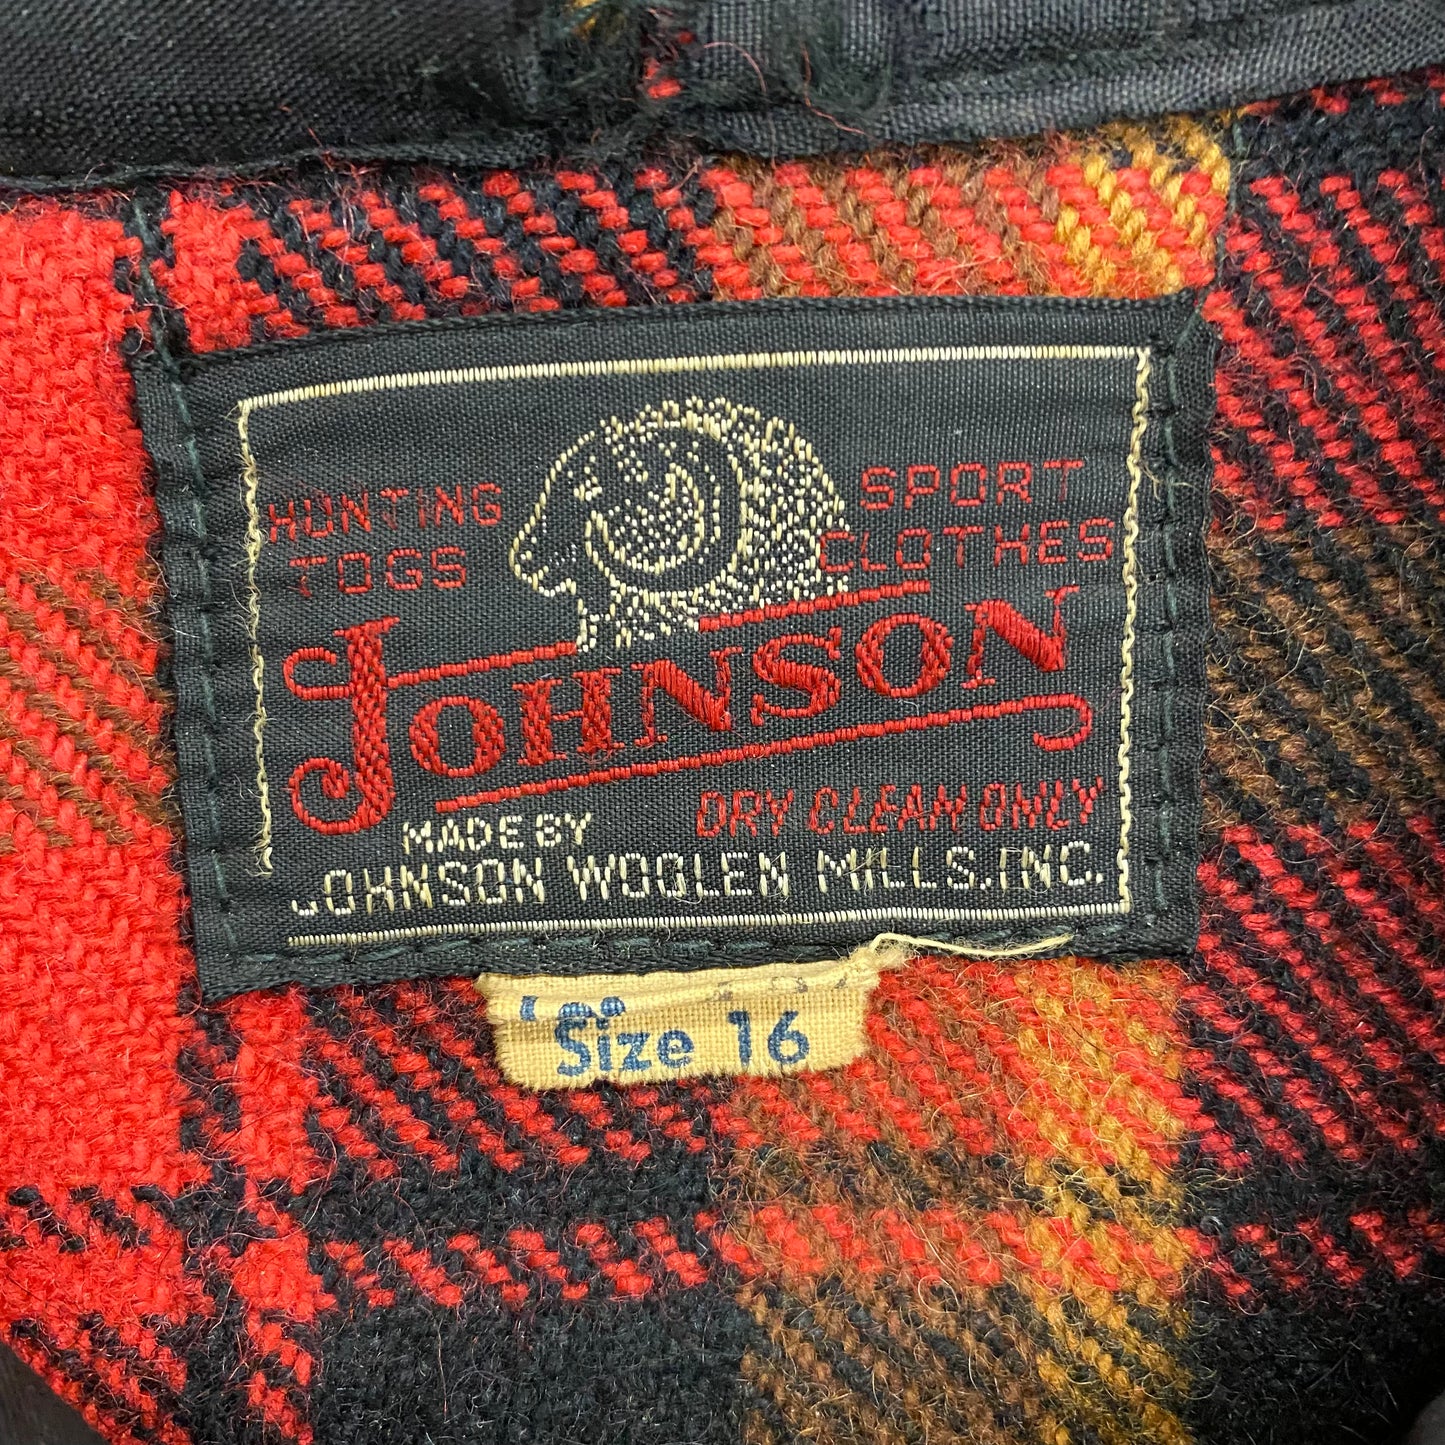 1960s/1970s Johnson Woollen Mills Plaid Wool Hunting Jacket - Size Medium